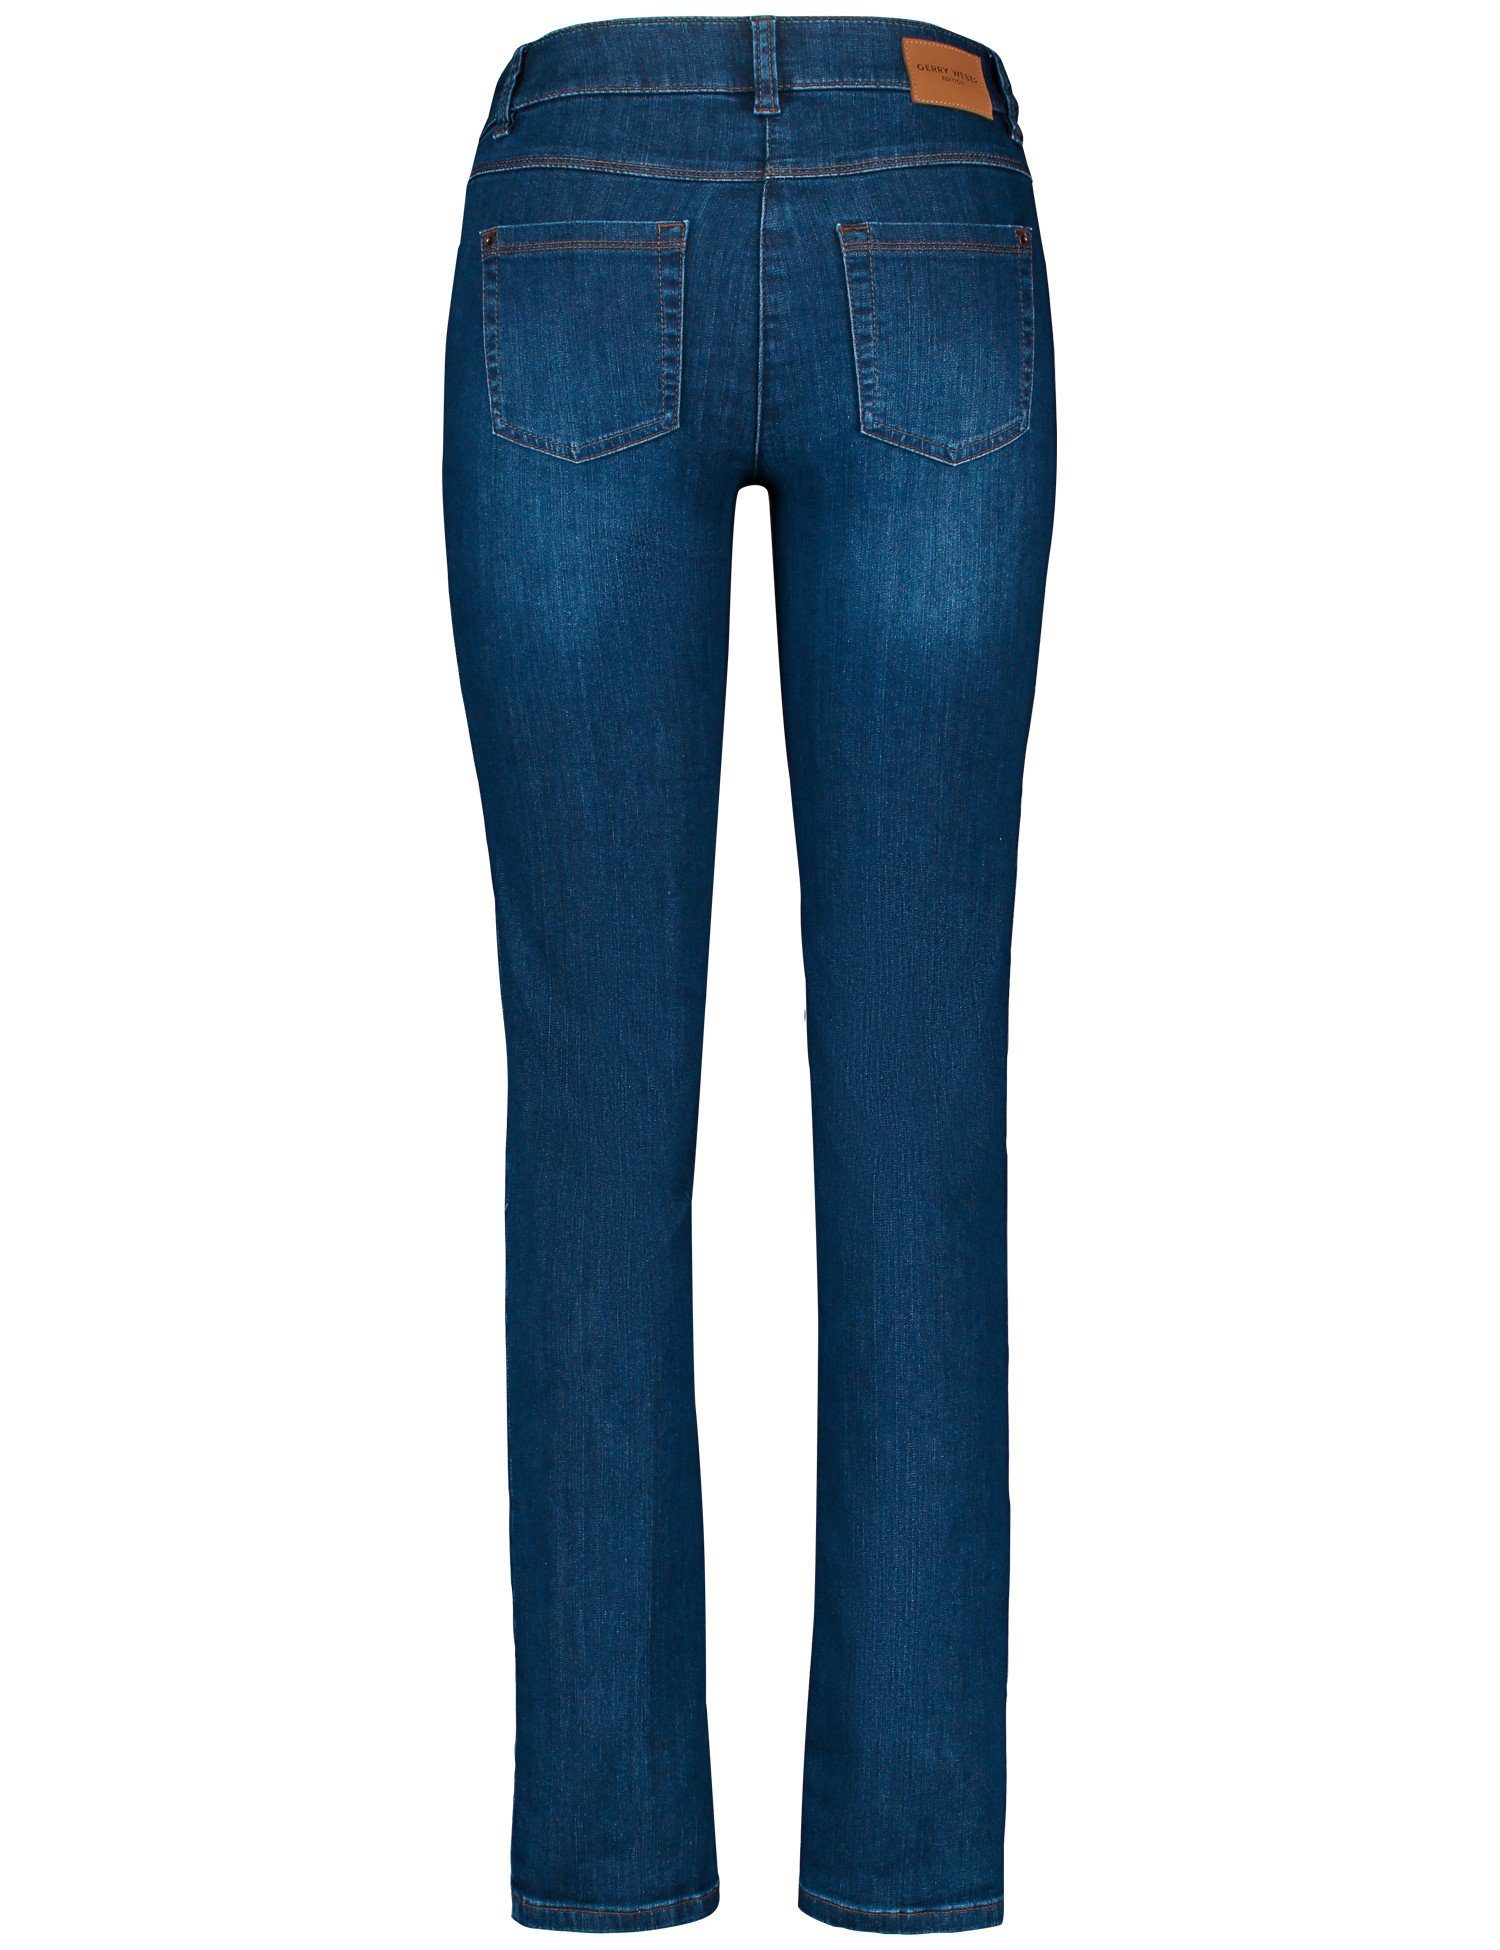 Slimfit WEBER Stretch-Jeans 5-Pocket mit Jeans dark Best4me blue denim GERRY use